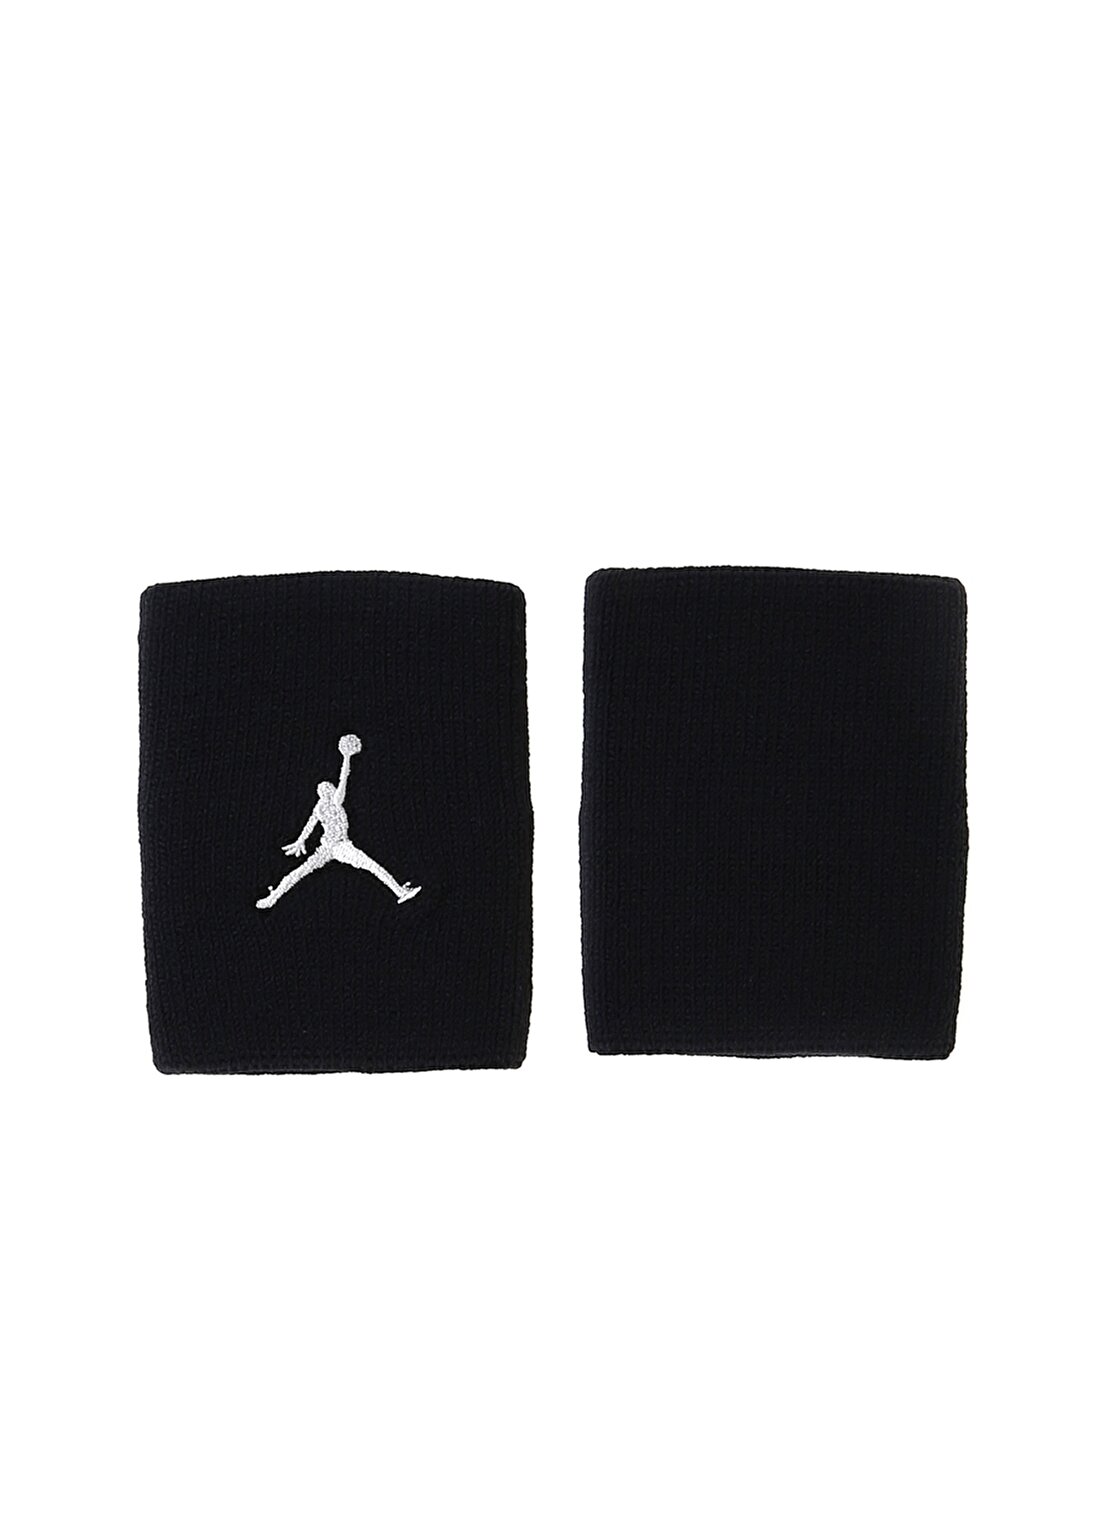 Nike Aksesuar Siyah - Beyaz Sporcu Bilekliği J.KN.01.010